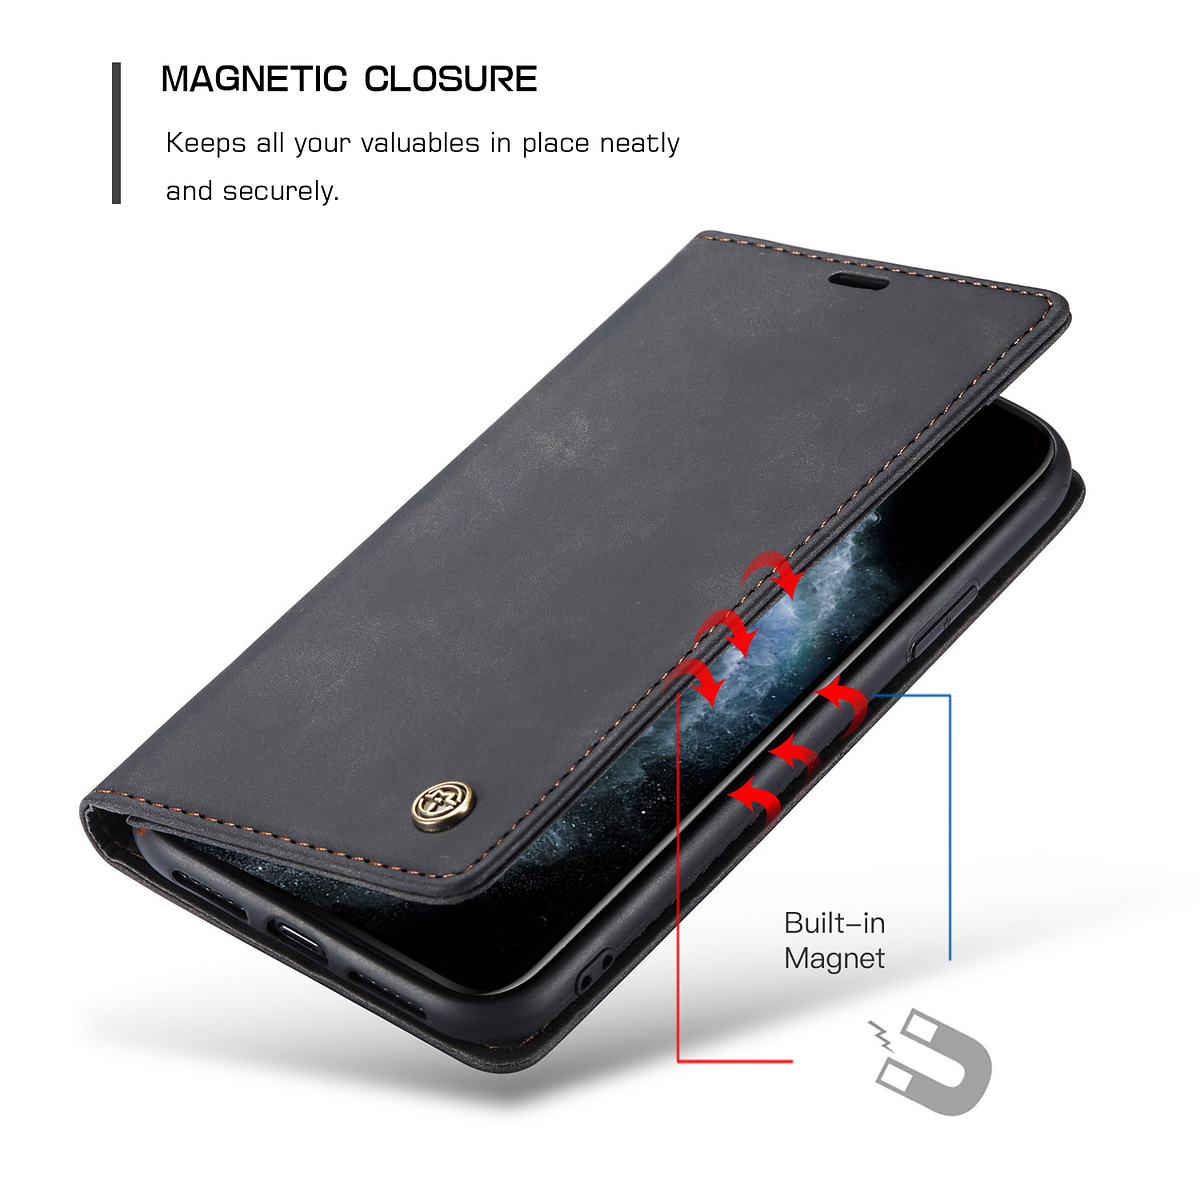 CaseMe plånboksfodral, iPhone 11 Pro Max, svart